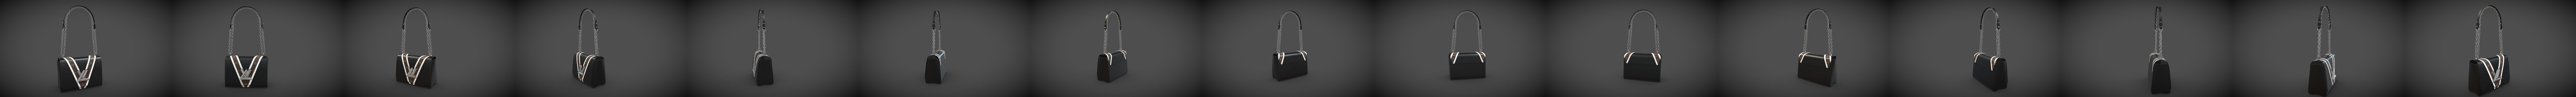 Louis Vuitton Bag Twist Epi Red with studs | 3D model